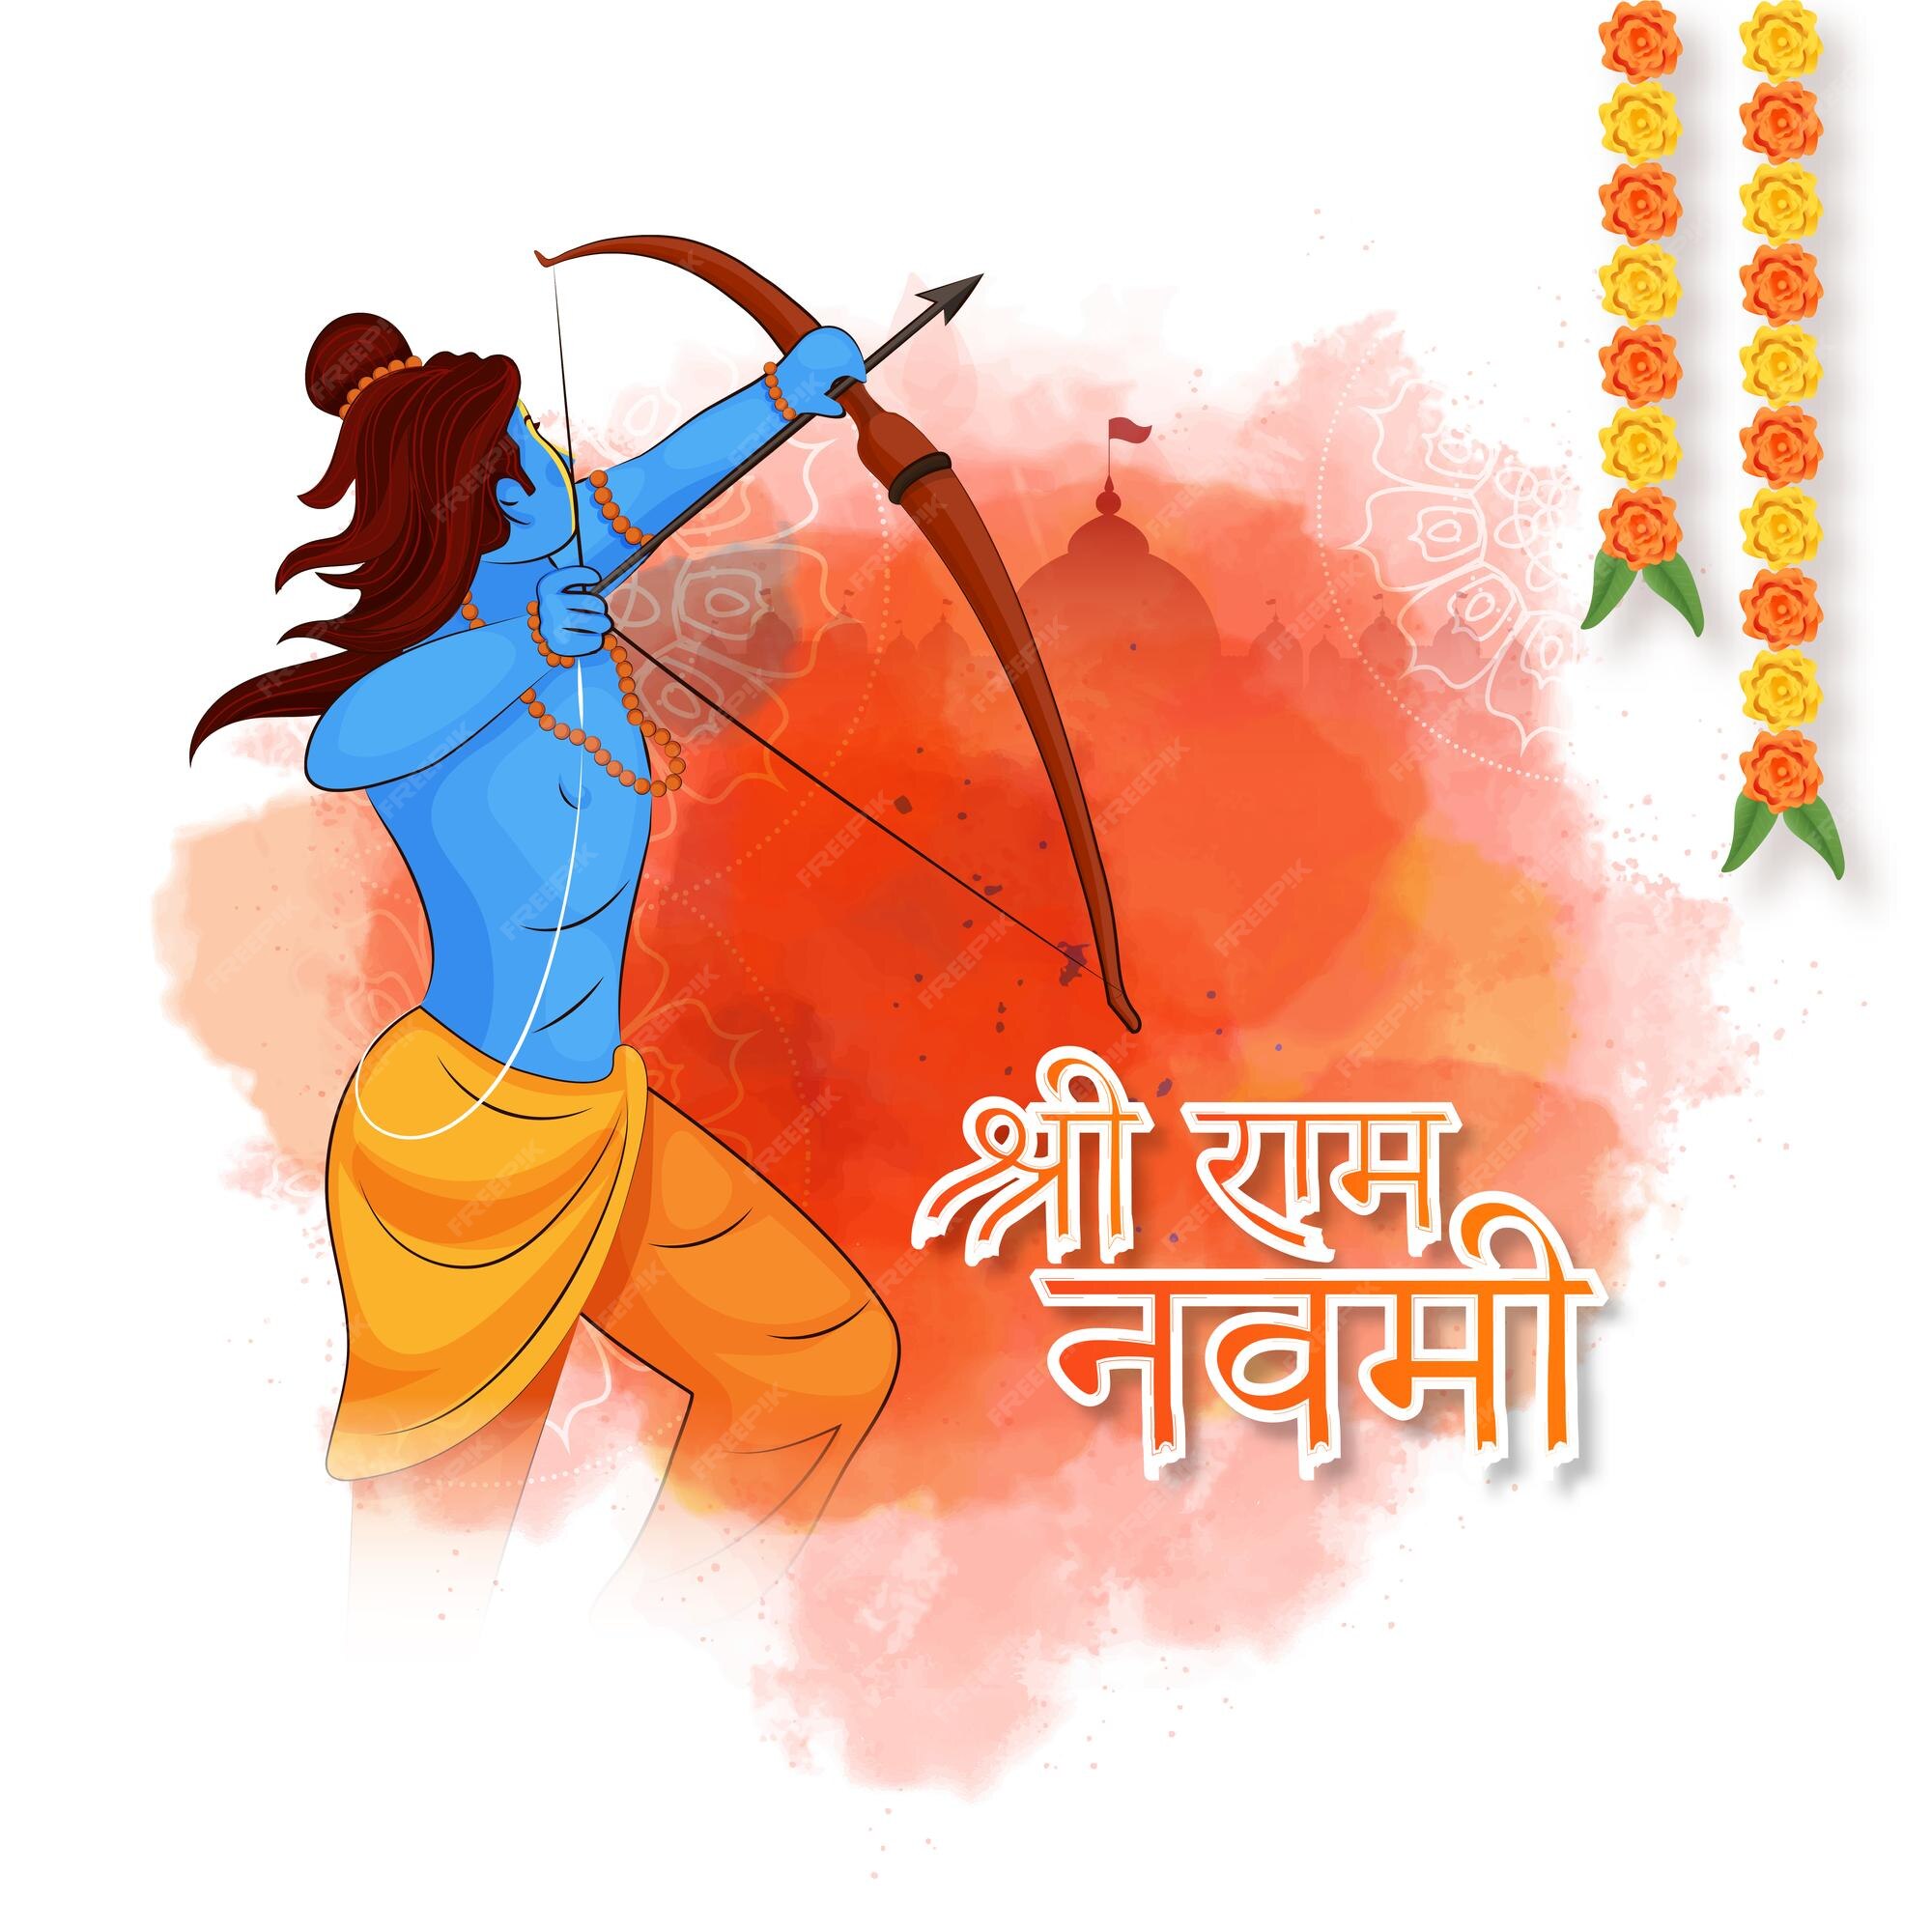 Premium Vector | Hindu mythological lord rama holding bow and arrow taking  an aim on mandala pattern background for shri ram navami lord rama borthday  celebration backgrounds